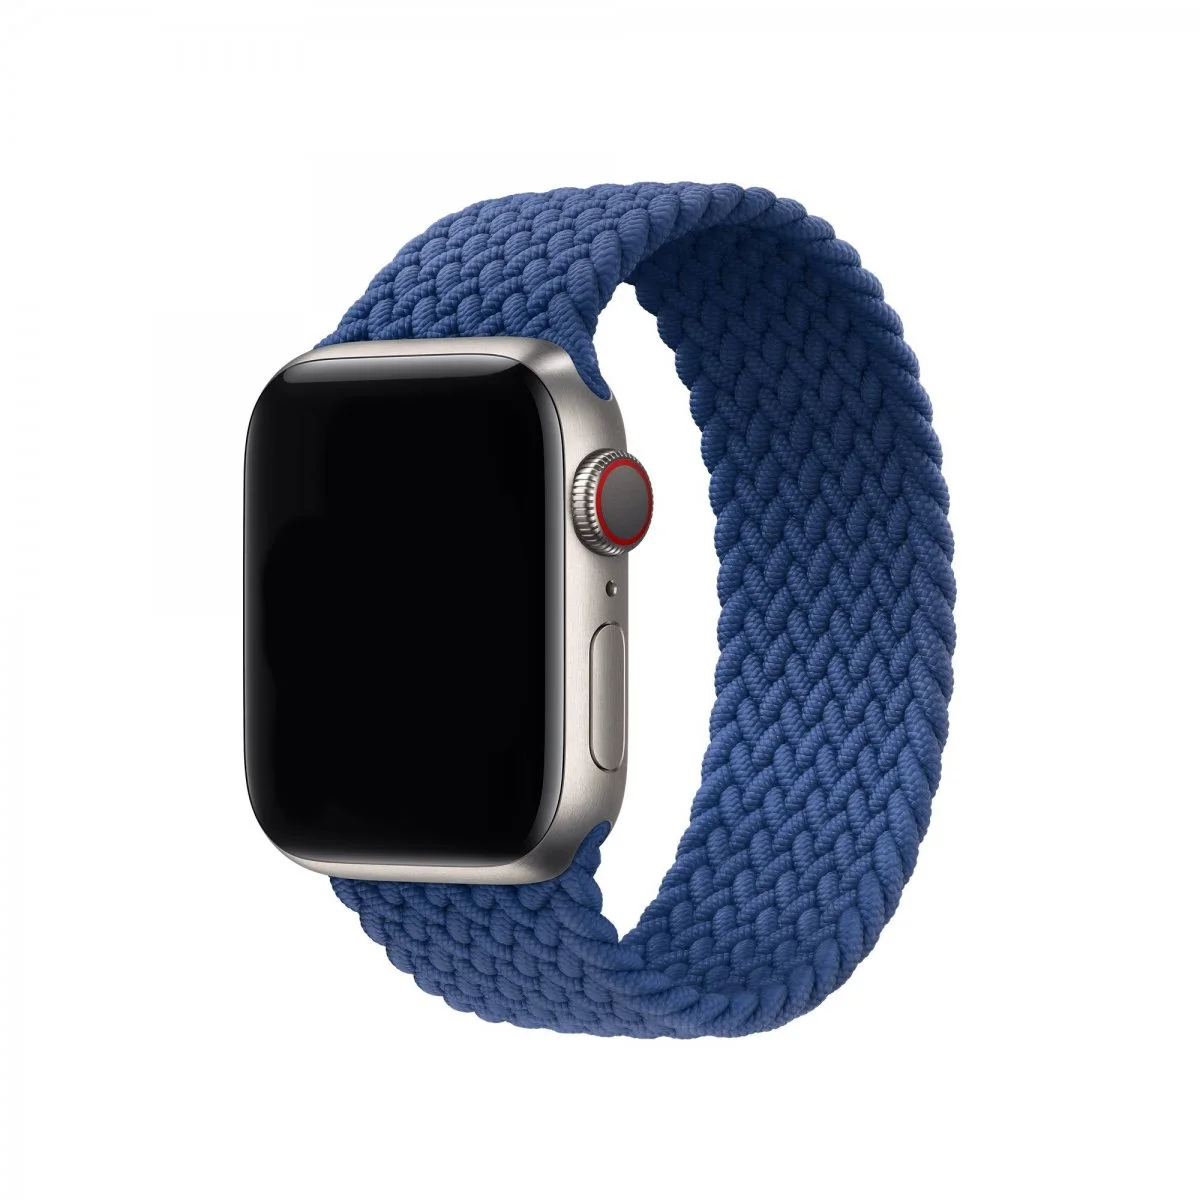 Řemínek iMore Braided Solo Loop Apple Watch Series 1/2/3 42mm - atlanticky modrý (S)